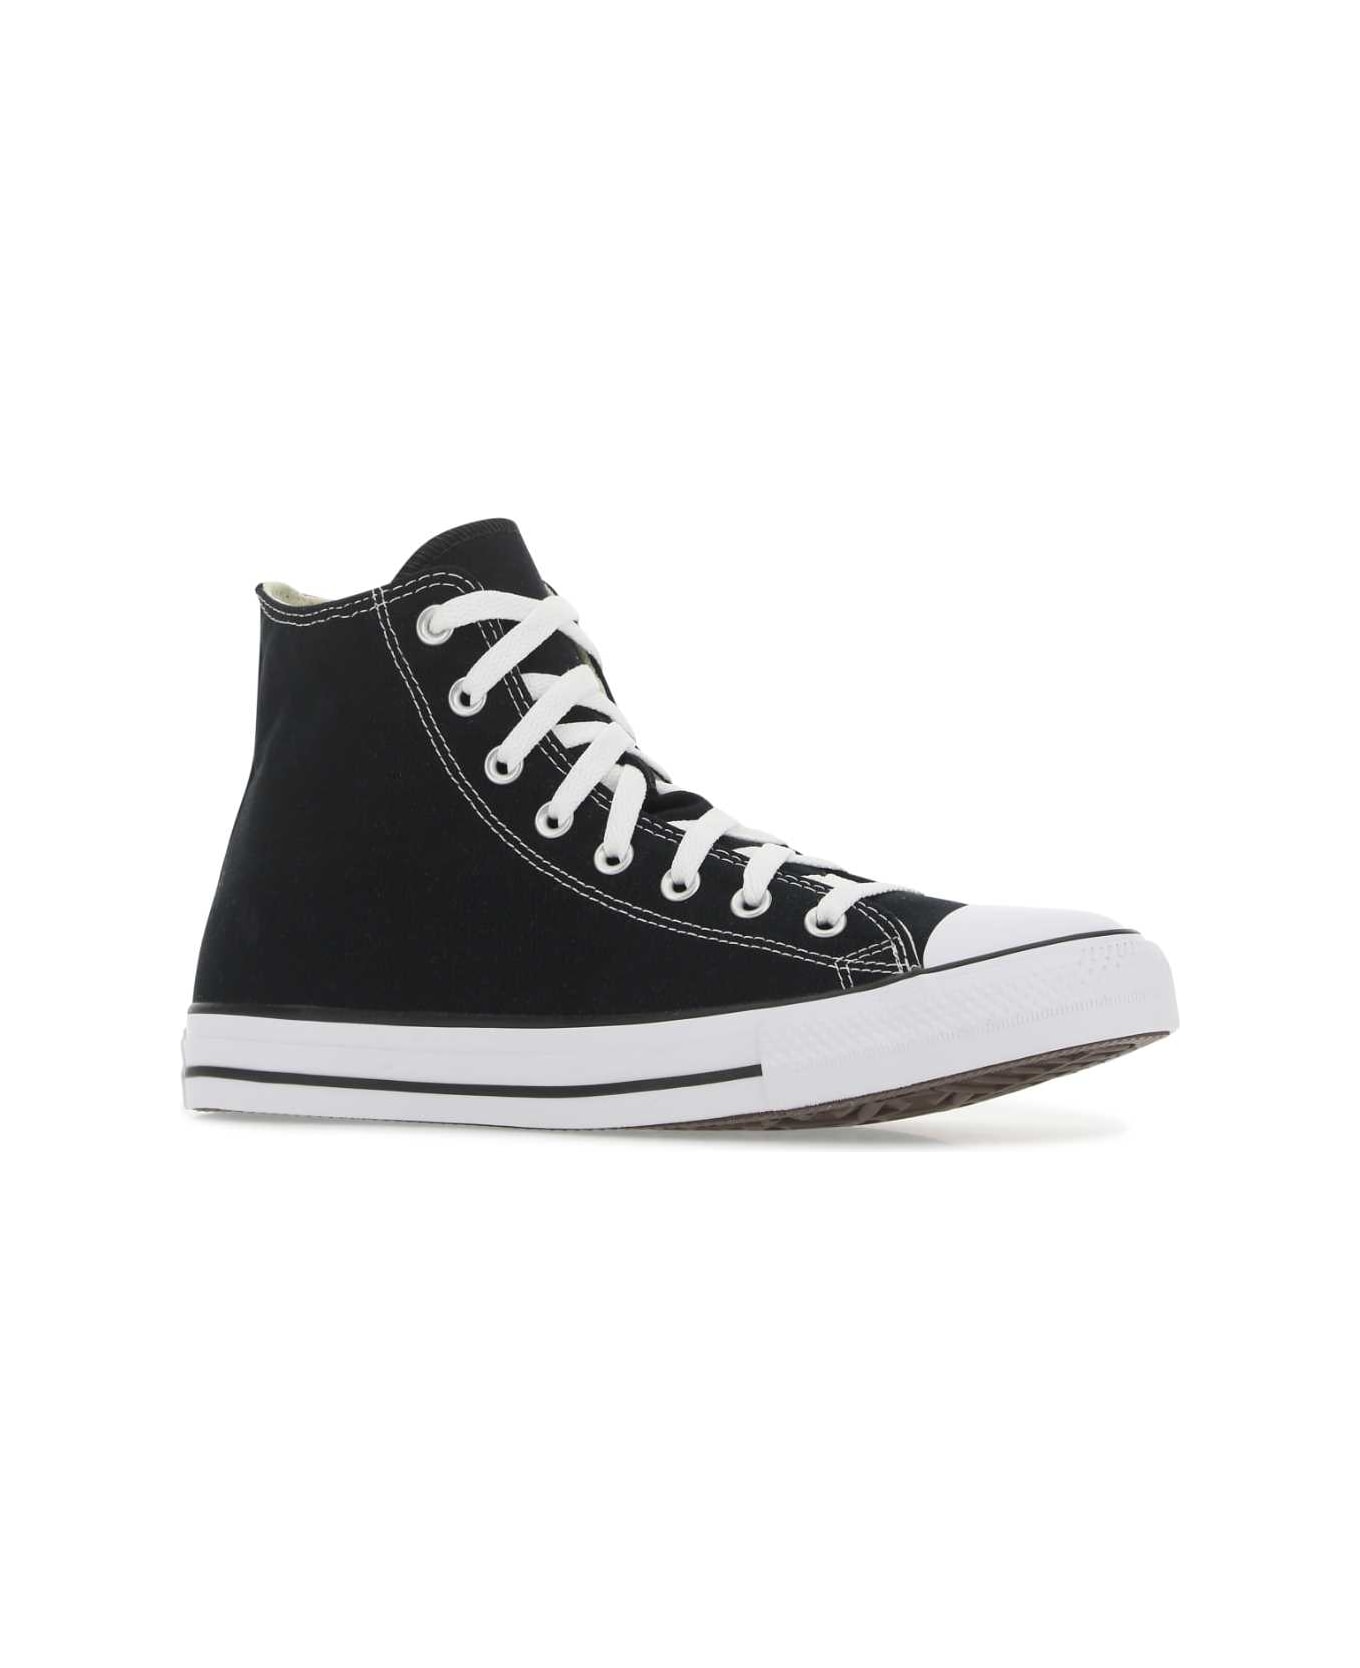 Converse Black Canvas Chuck Taylor Hi Sneakers - BLACK